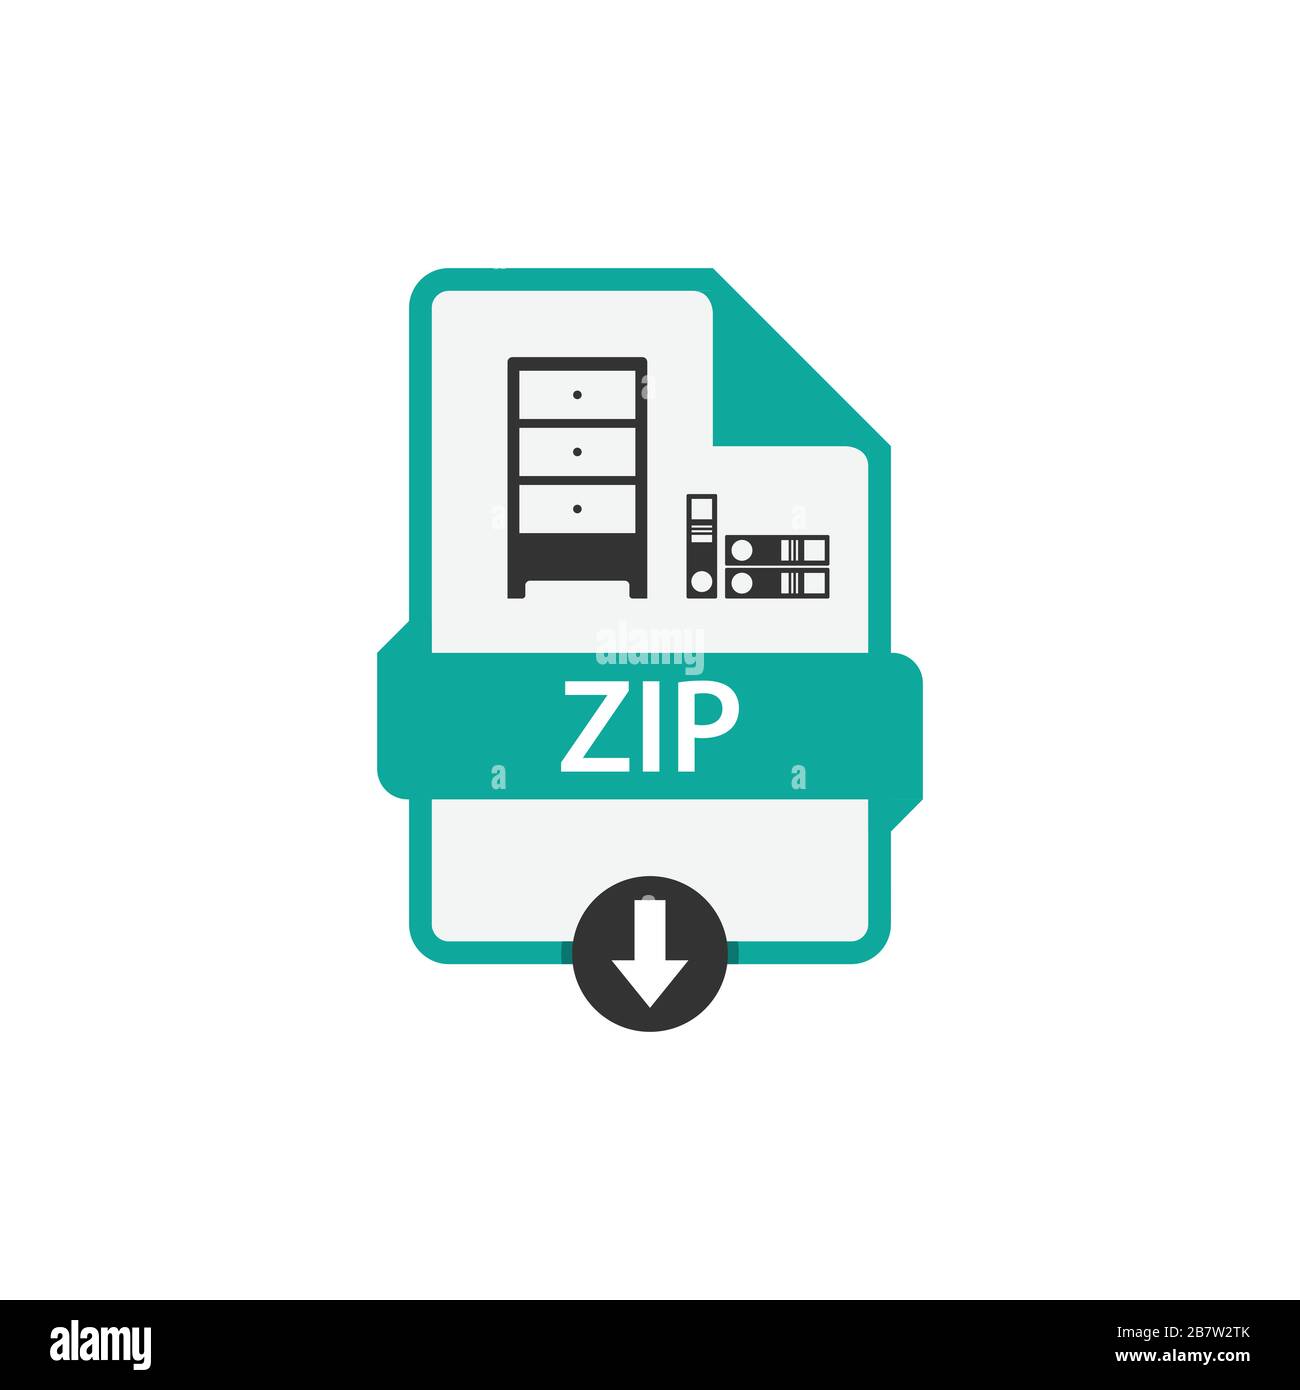 ZIP document download file format vector image. ZIP file icon flat design graphic vector Stock Vector